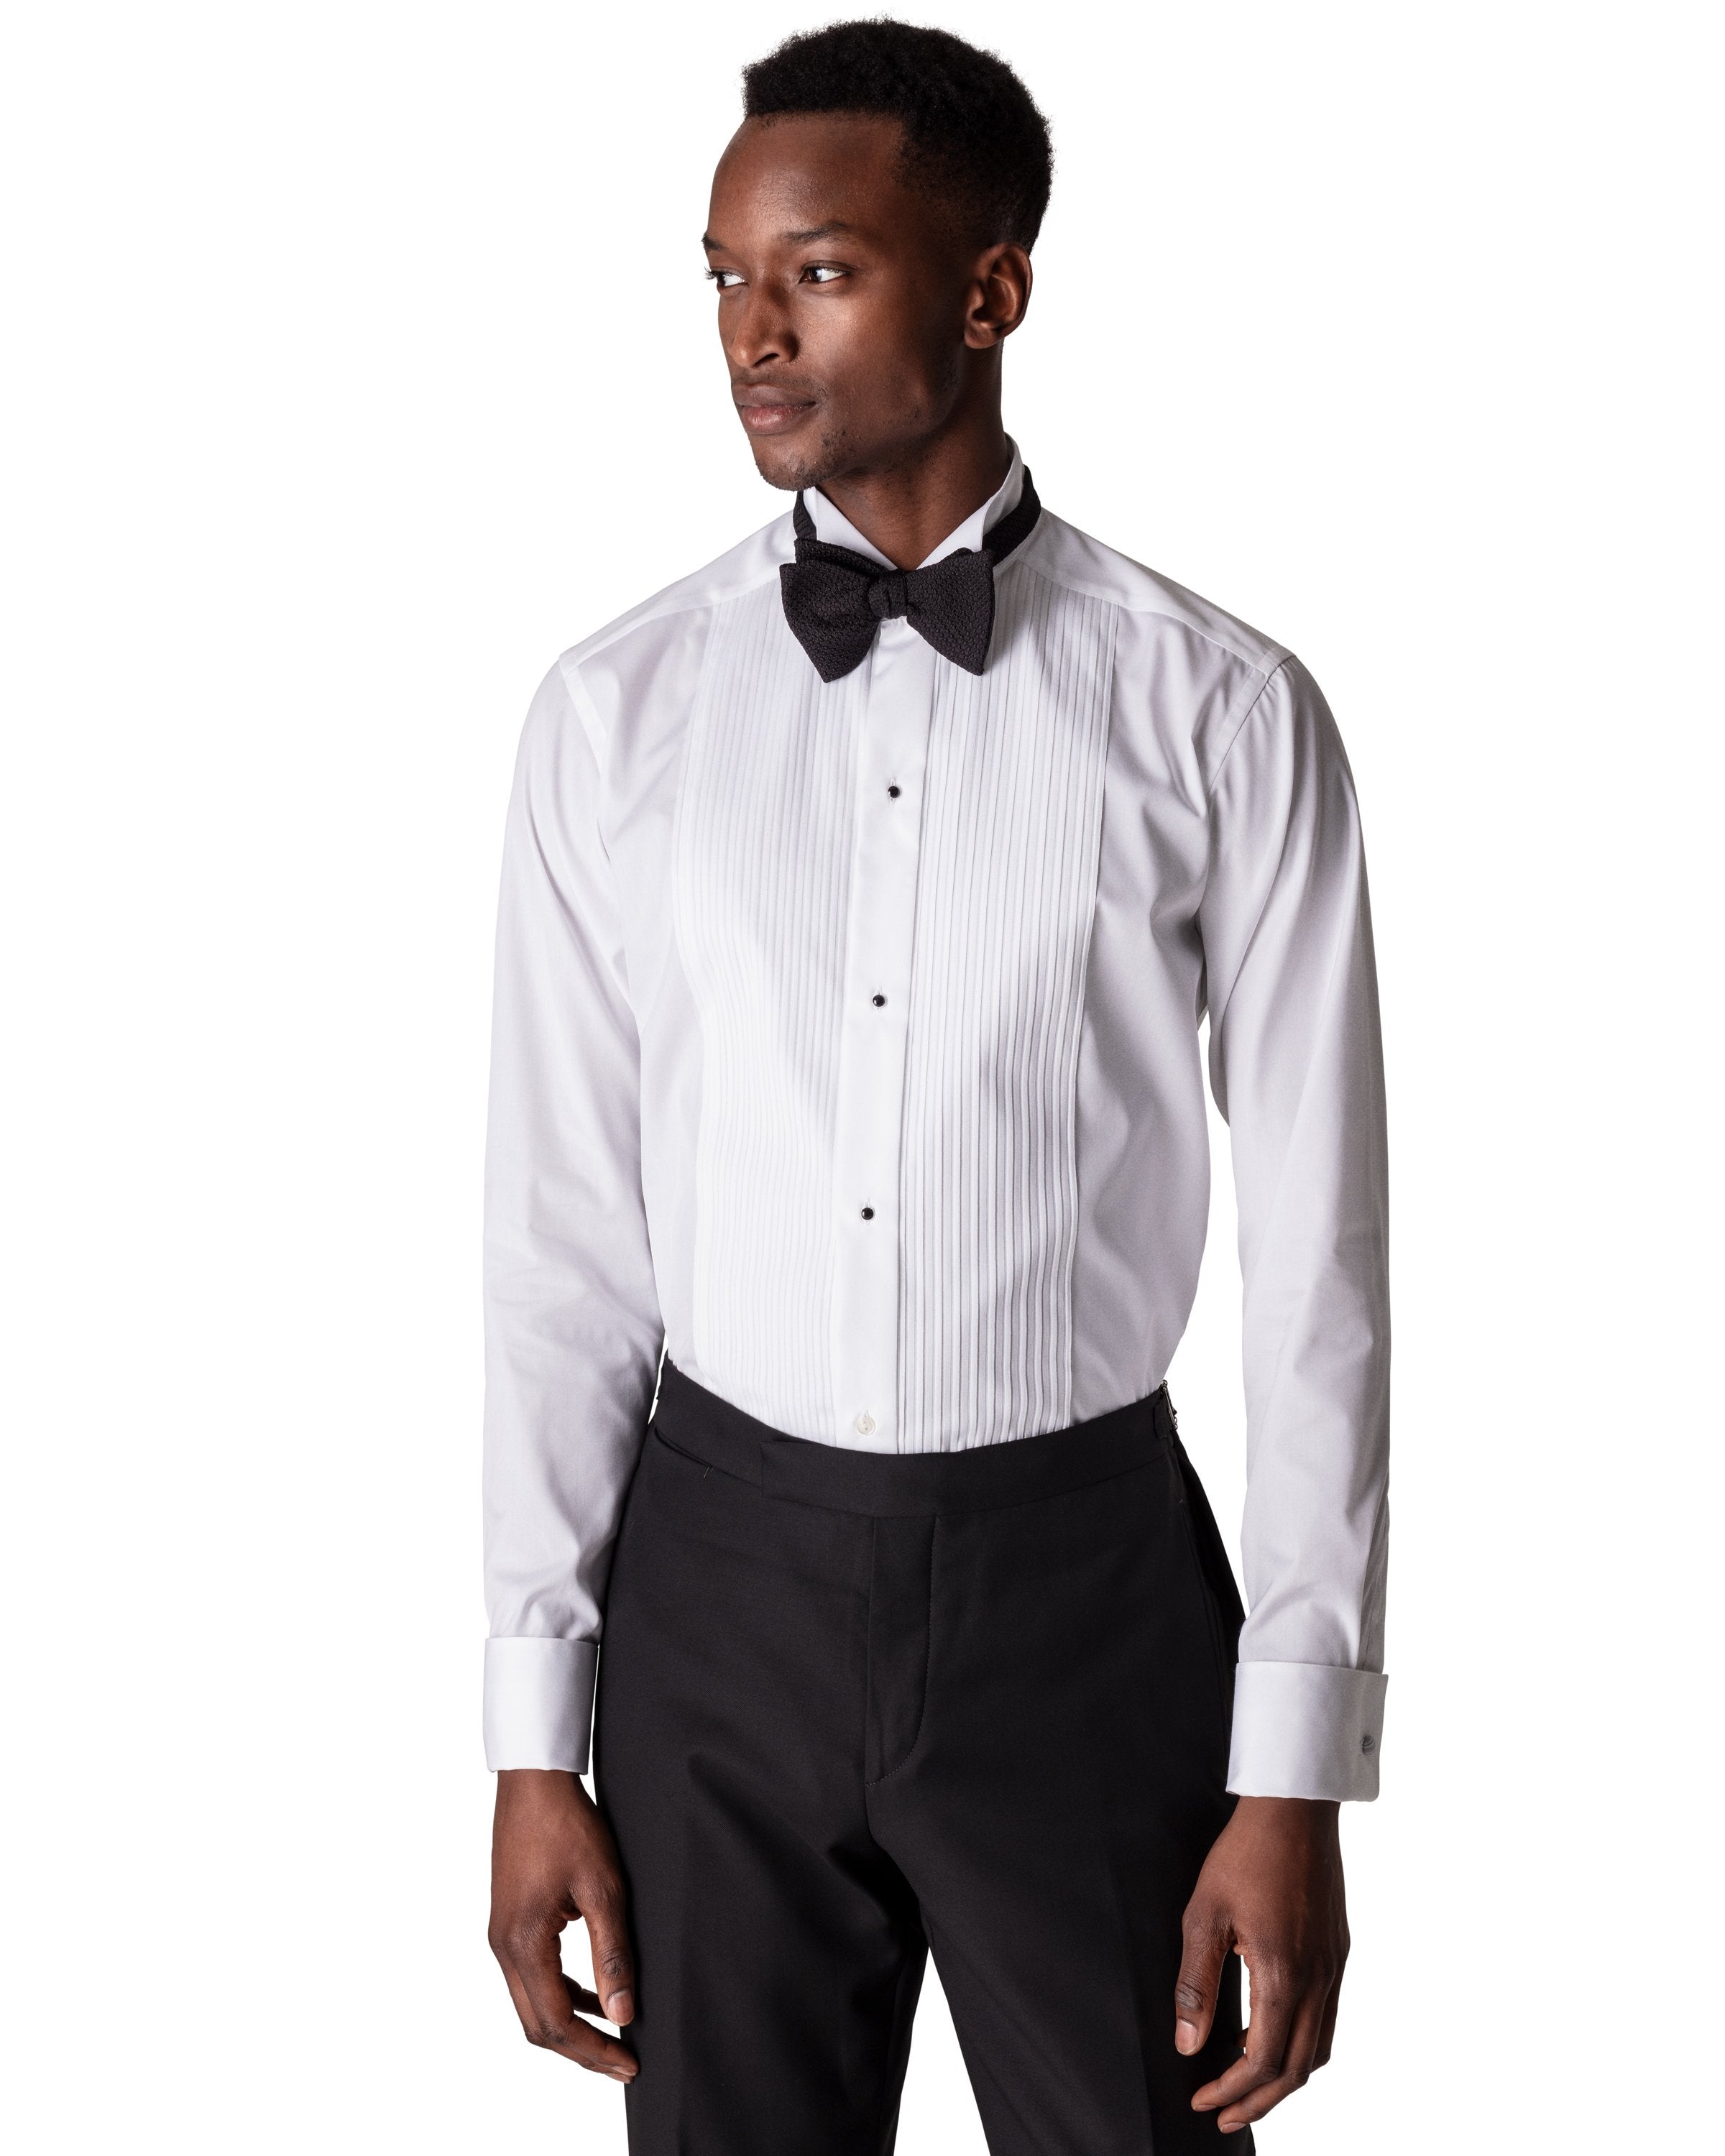 ETON - White Plissé Wing Collar Dress Shirt in CONTEMPORARY FIT 63153331000